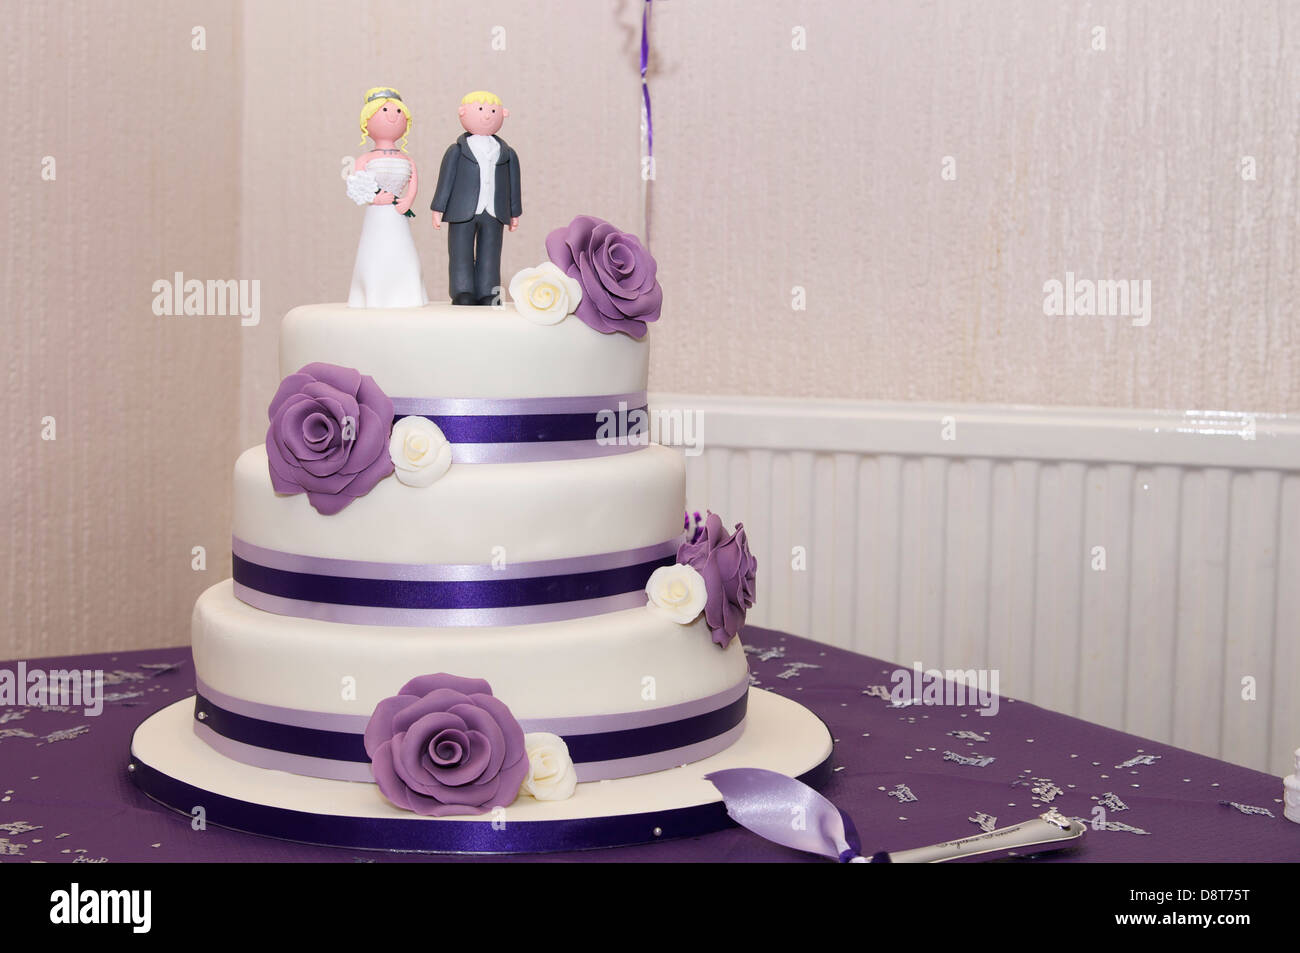 3 Tier Wedding Cake with Cupcake Tower - Bakealous